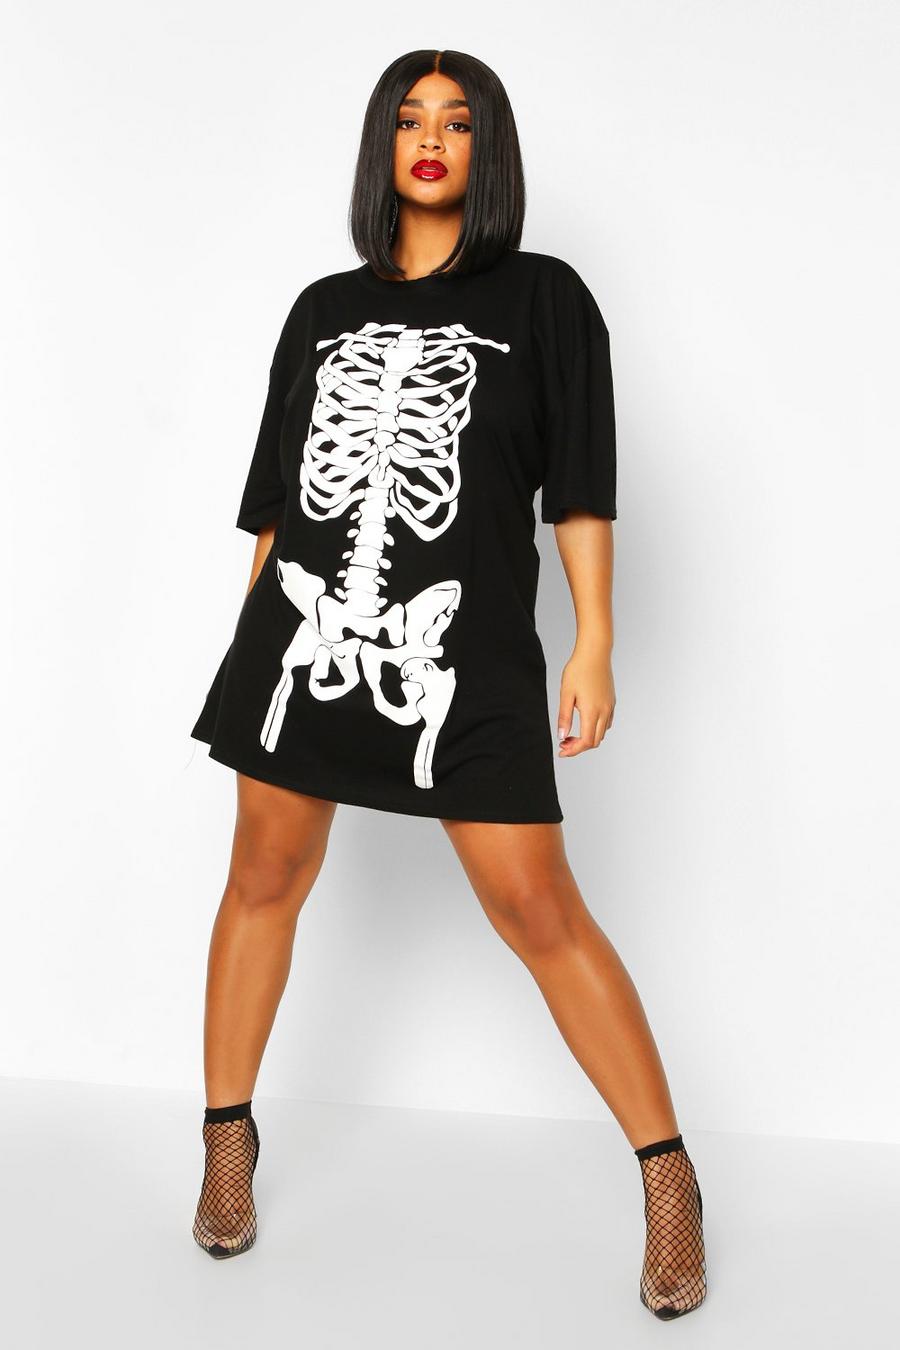 Funny Skeleton Shirt Halloween Shirts for Women Plus Size 1X 2X 3X 4X 5X  Halloween Clothes for Women 